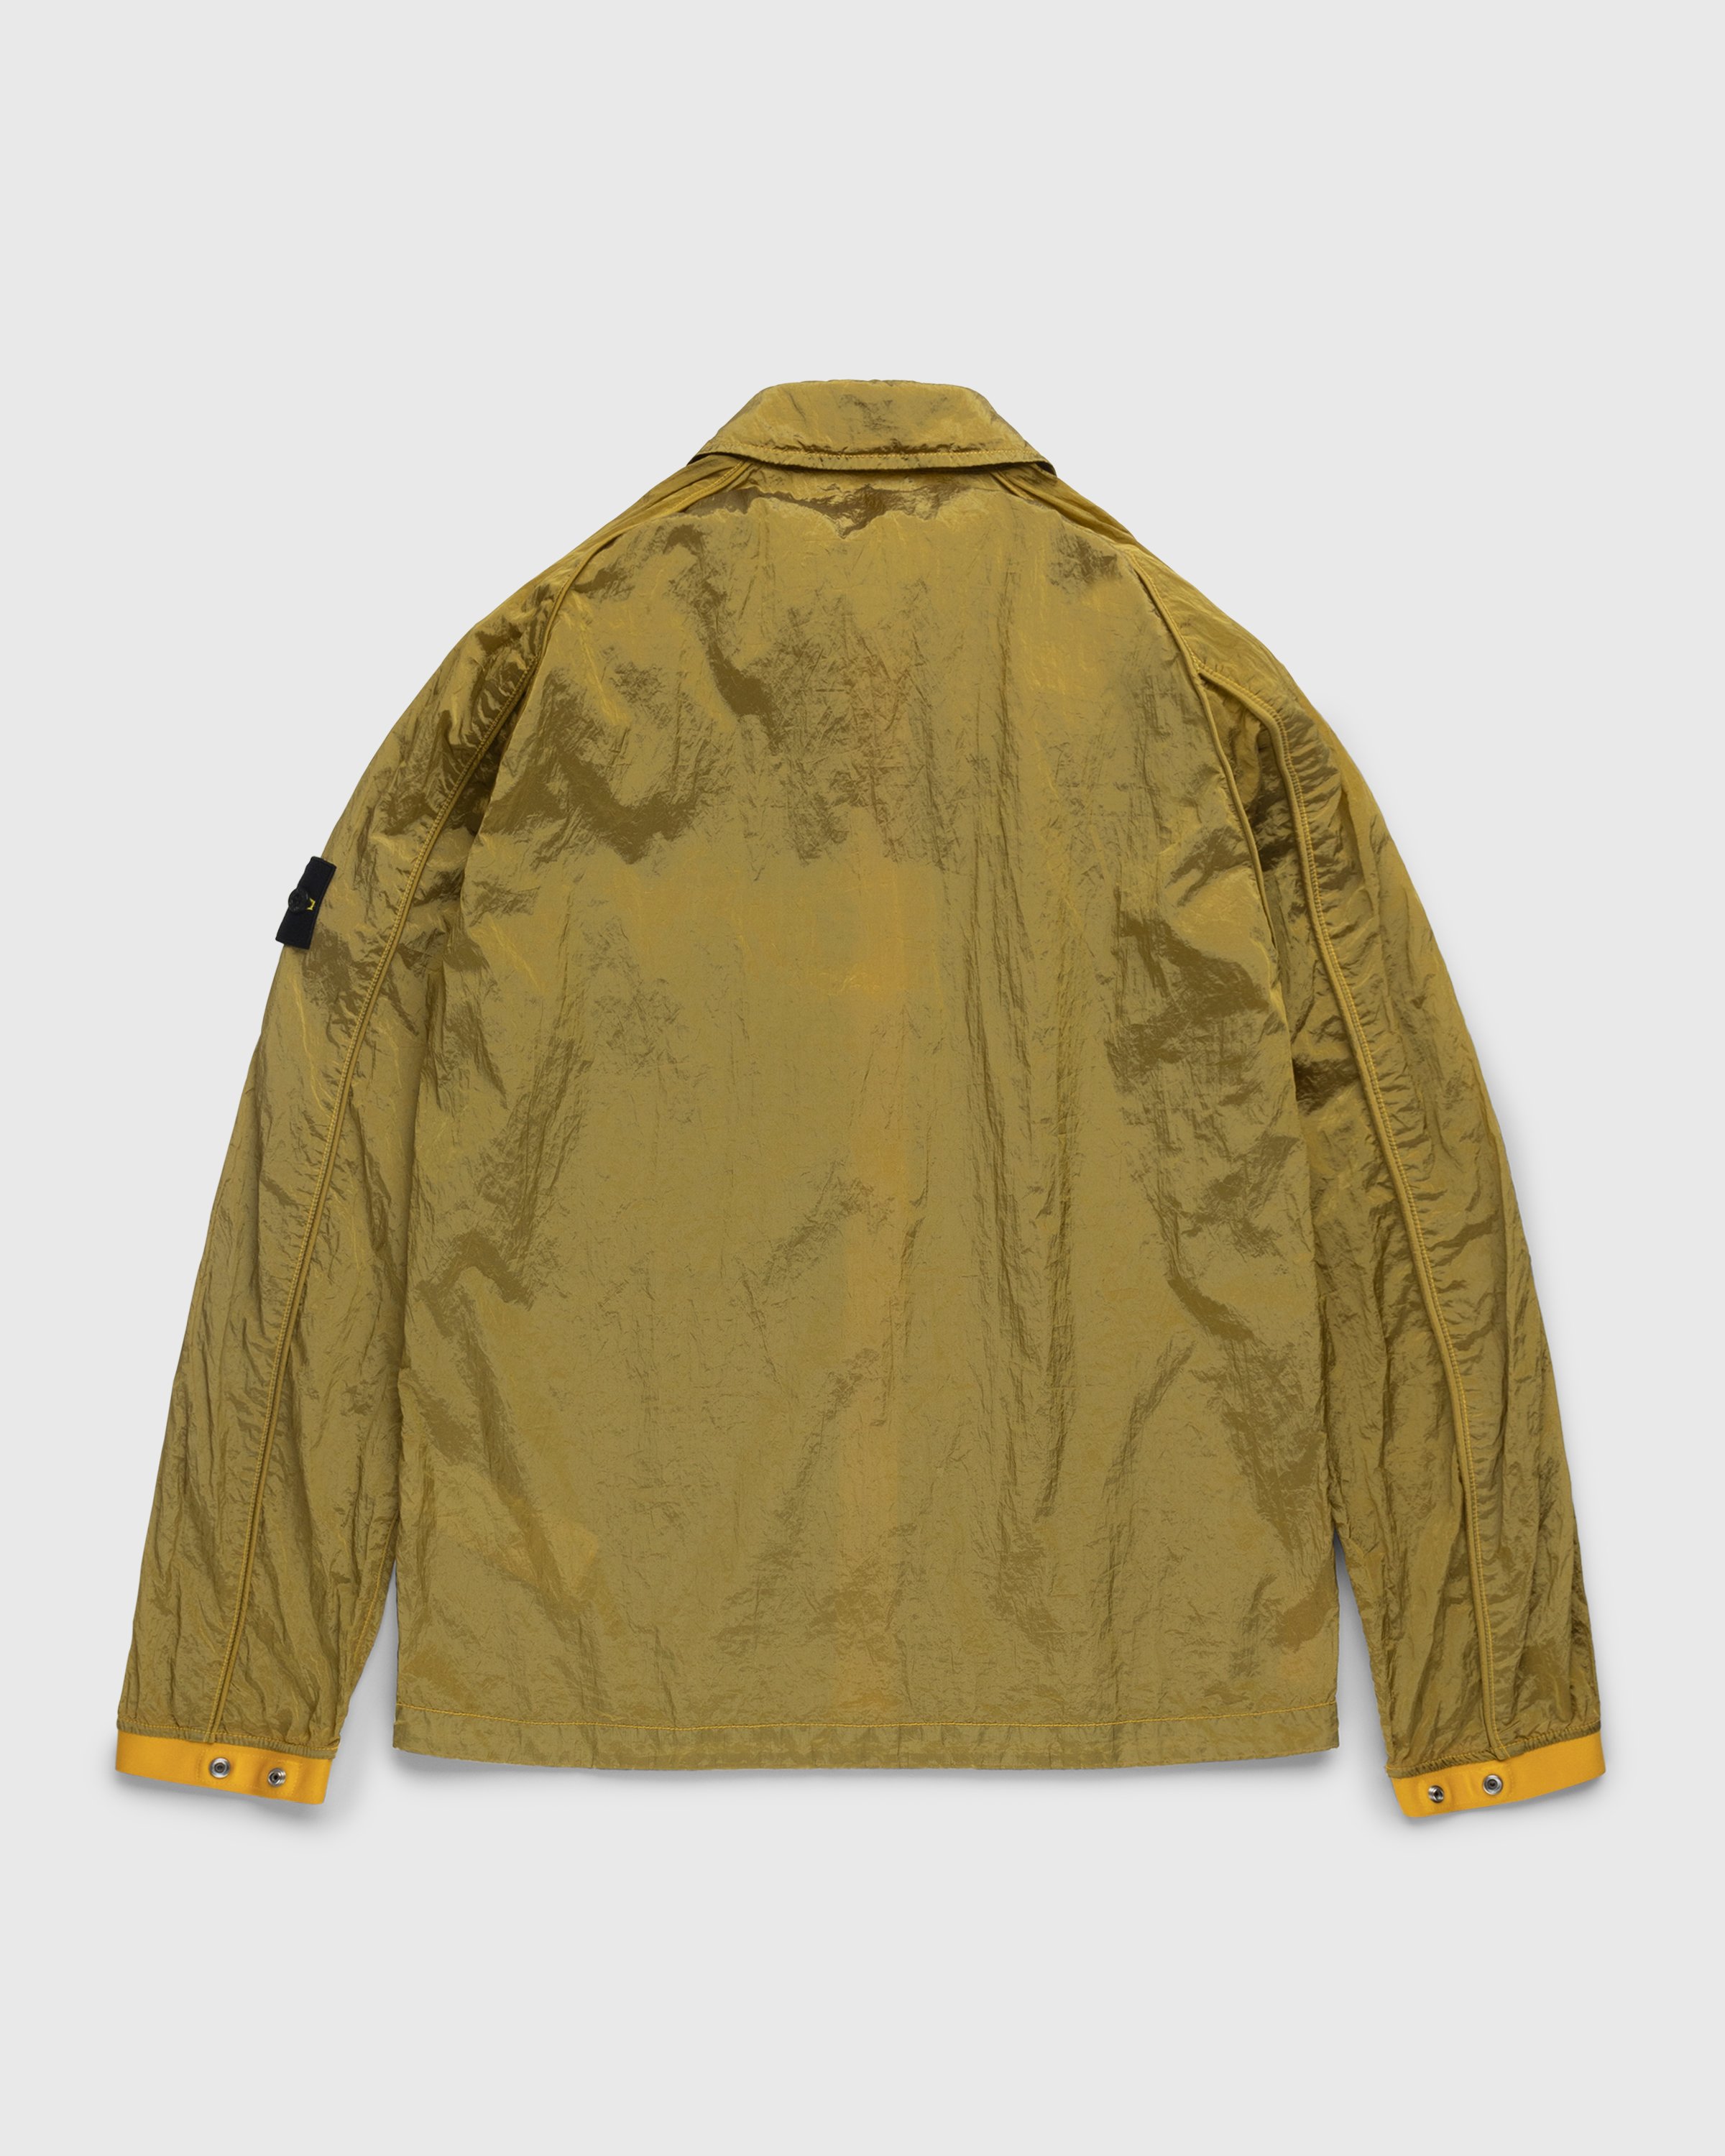 Stone Island - 12321 Garment-Dyed Nylon Metal Overshirt Yellow - Clothing - Yellow - Image 2